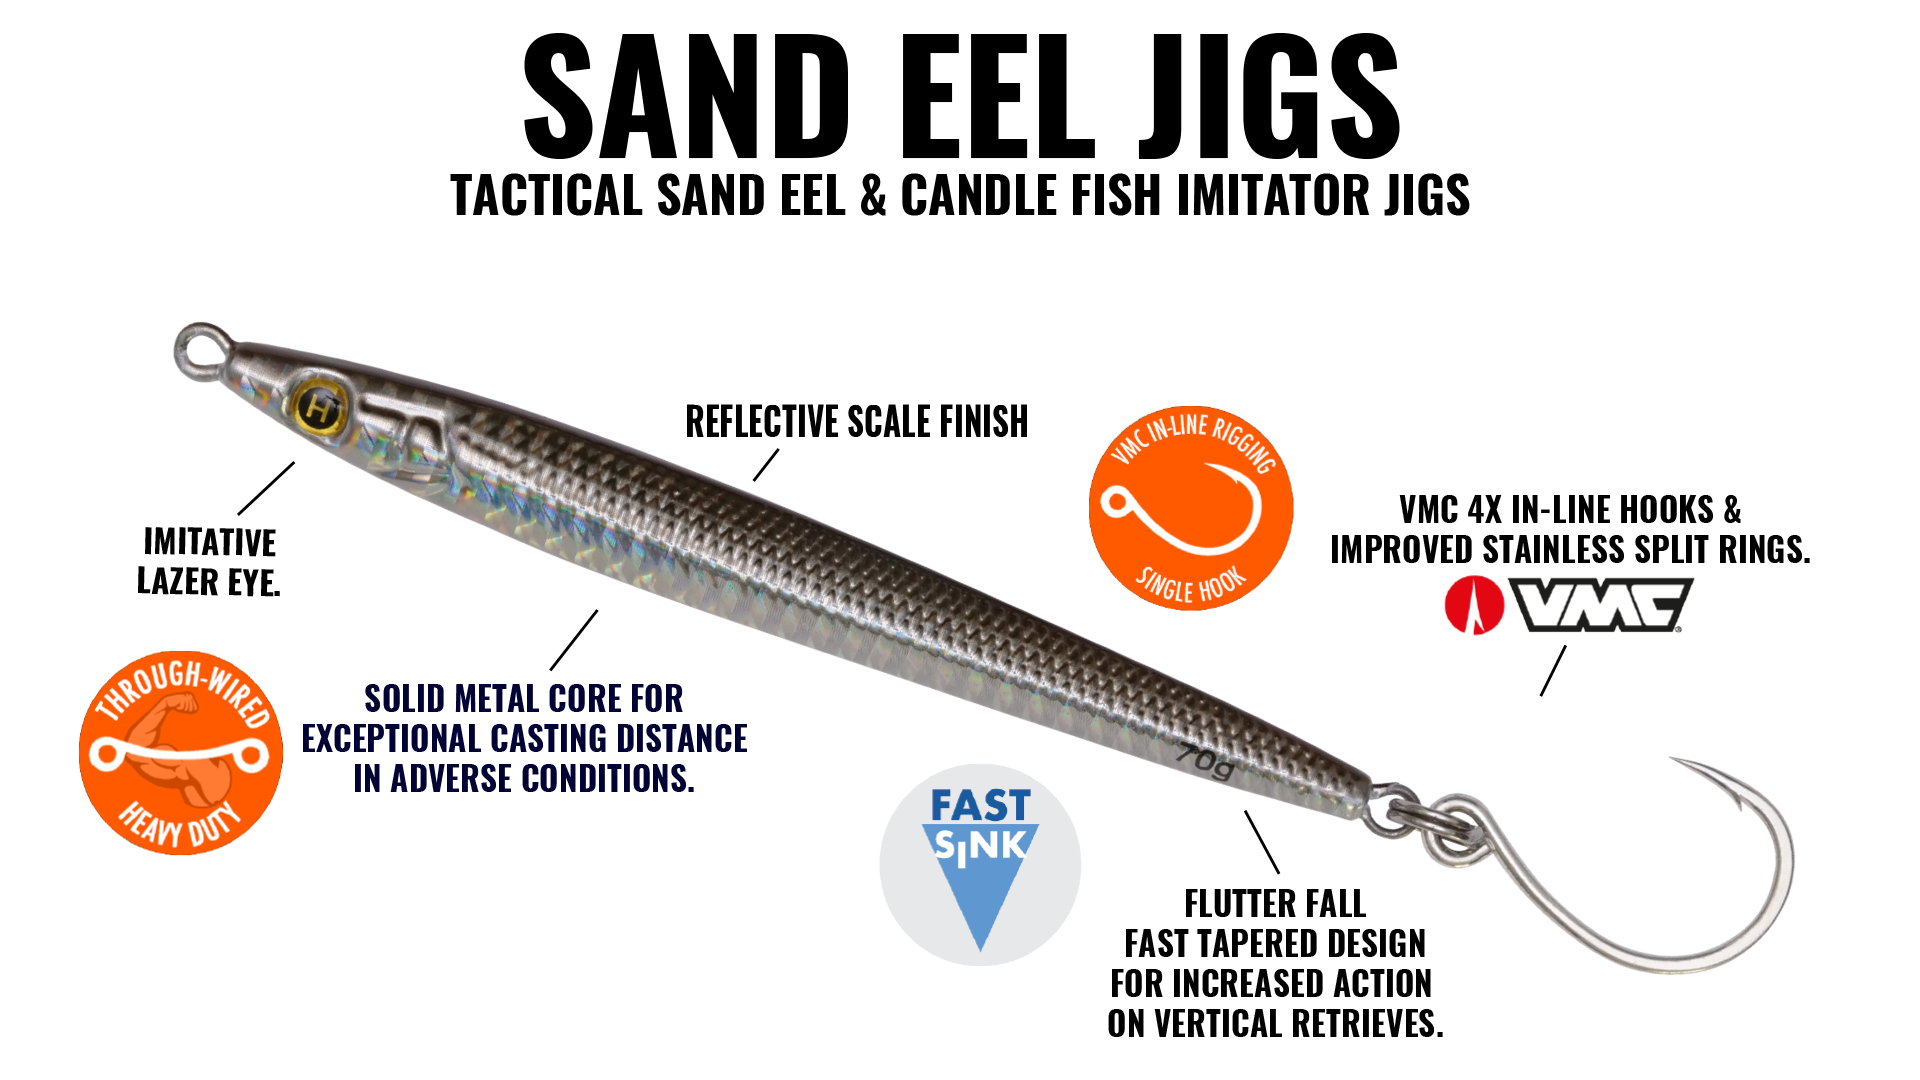 Sand Eel Jigs